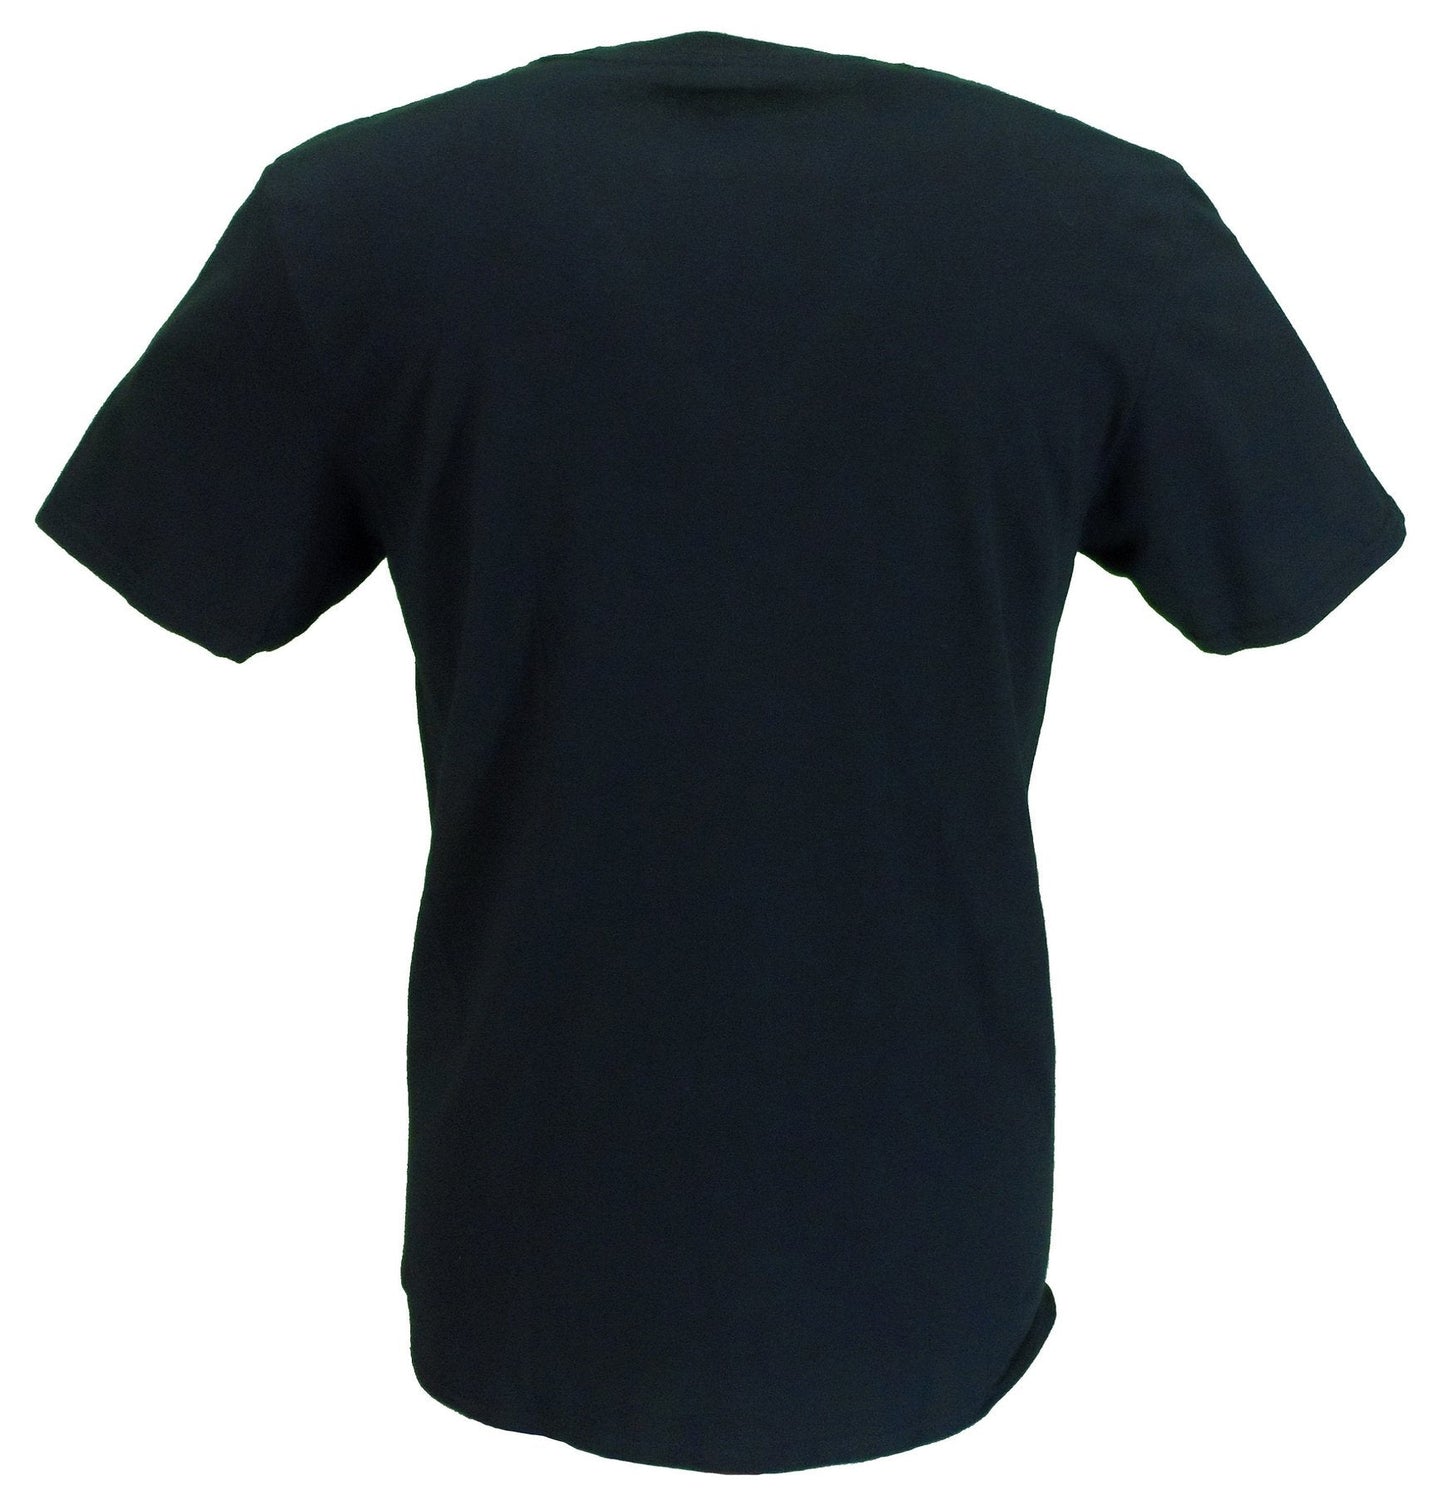 Mens Black Official Paul Weller Logo T Shirt